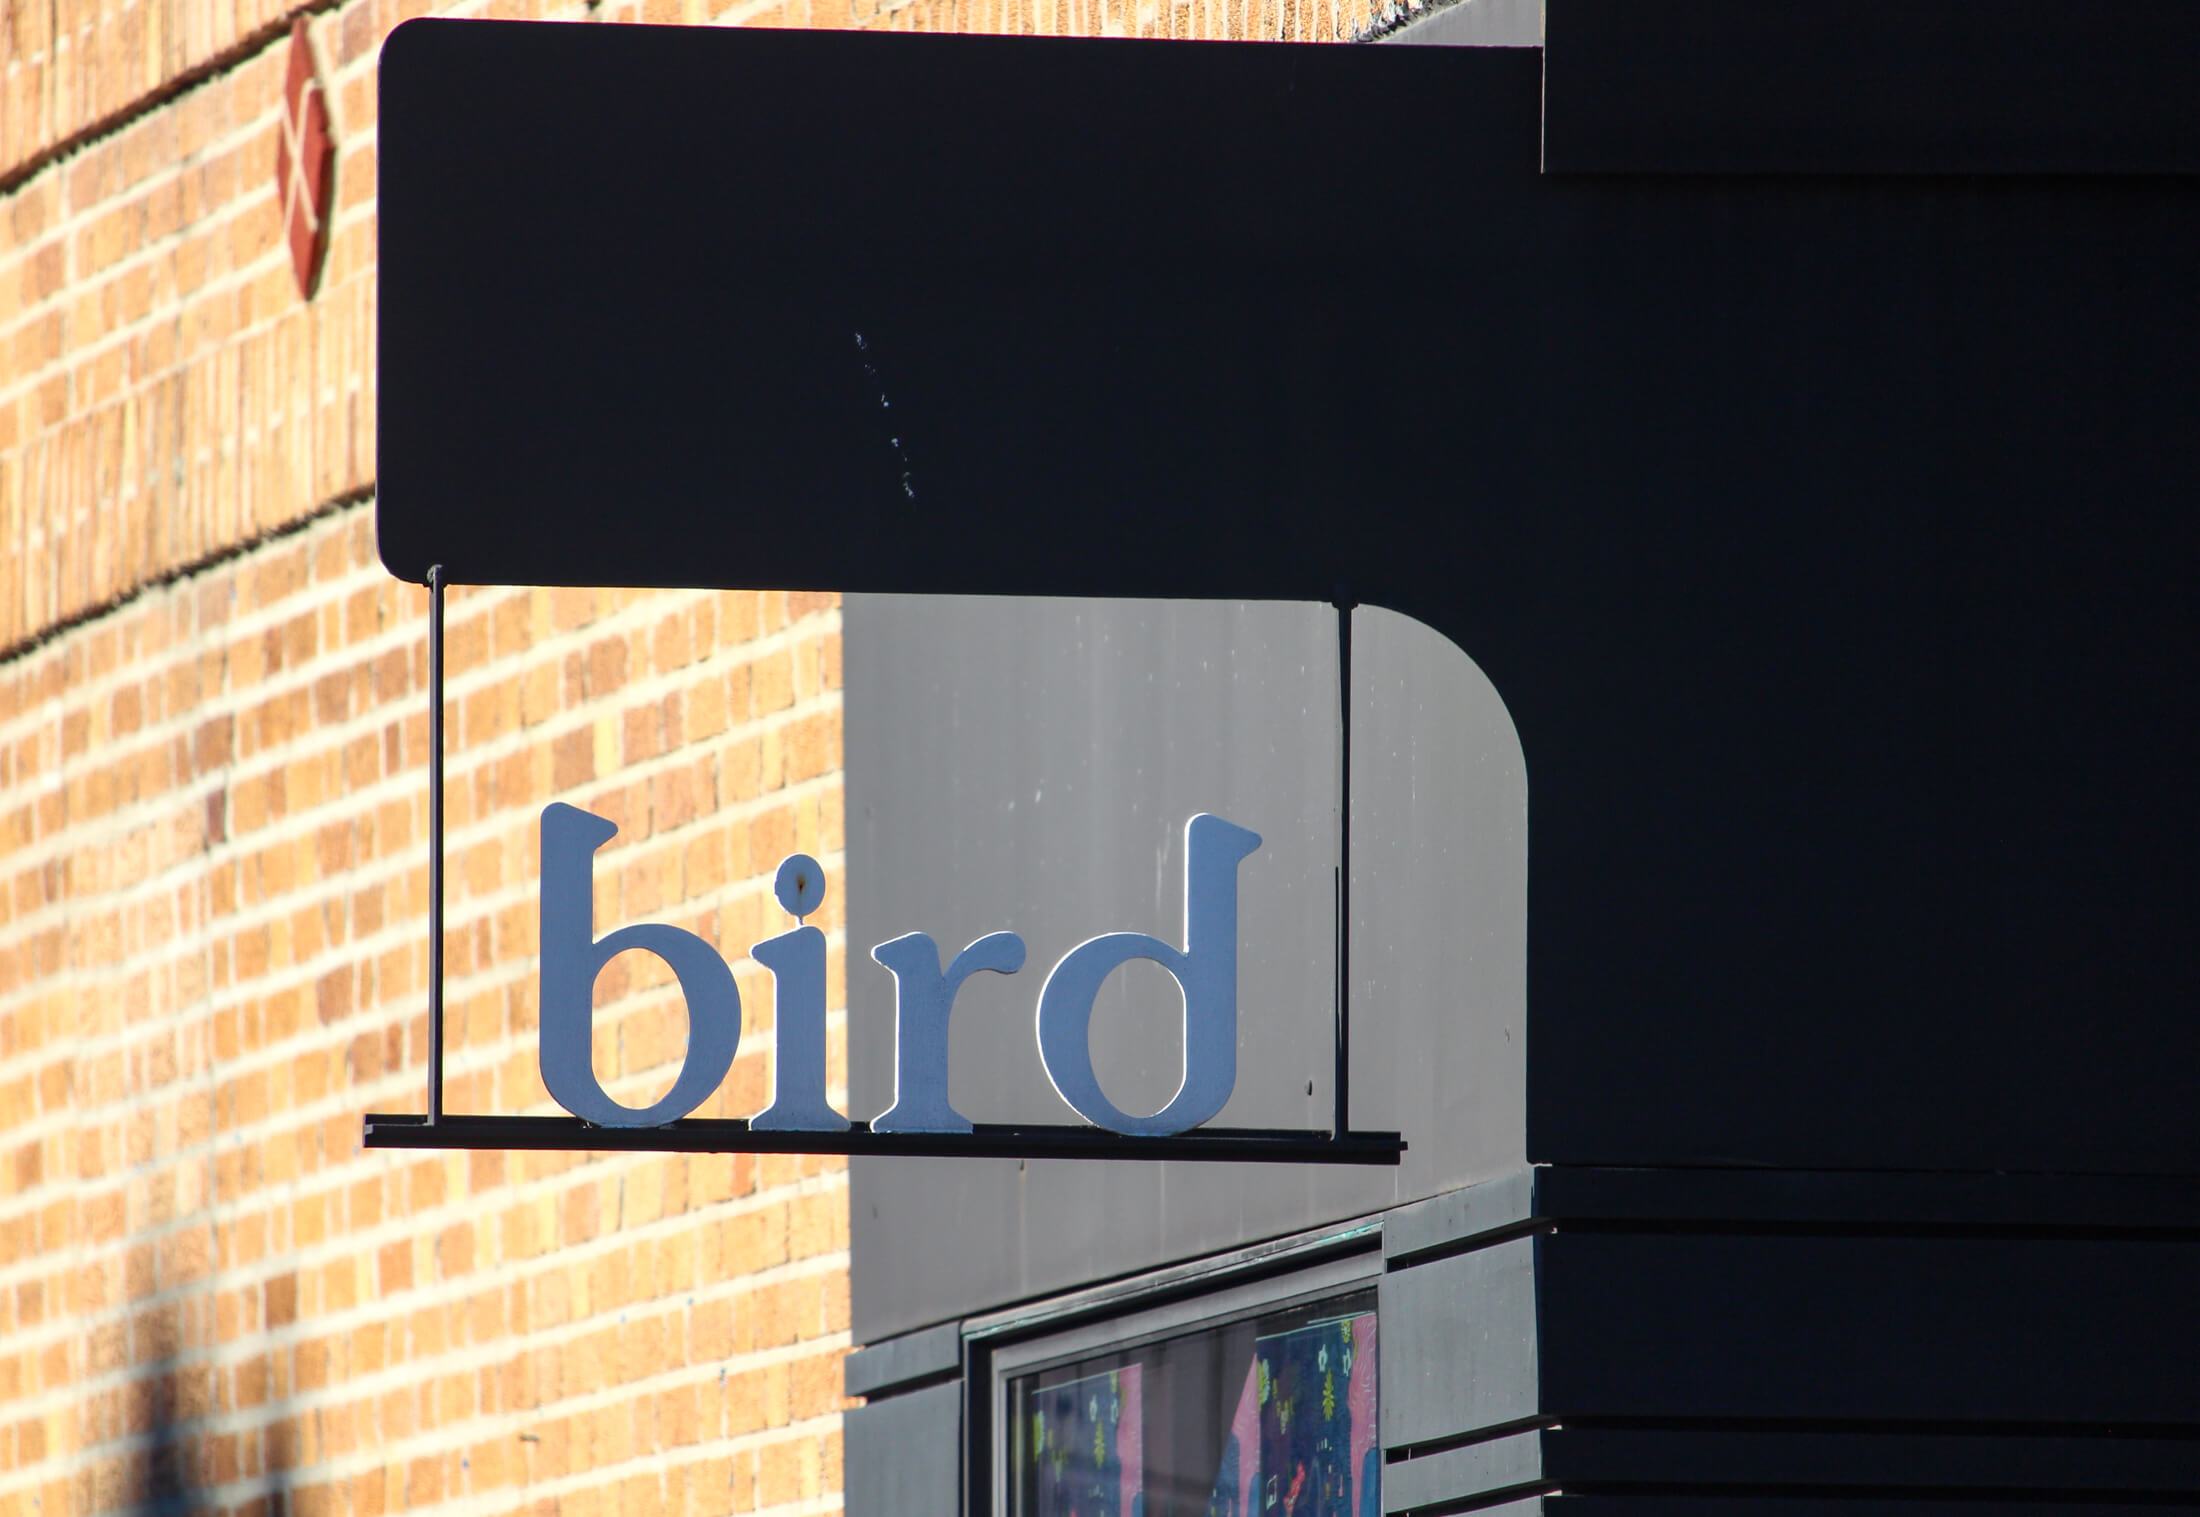 220 smith street bird storefront